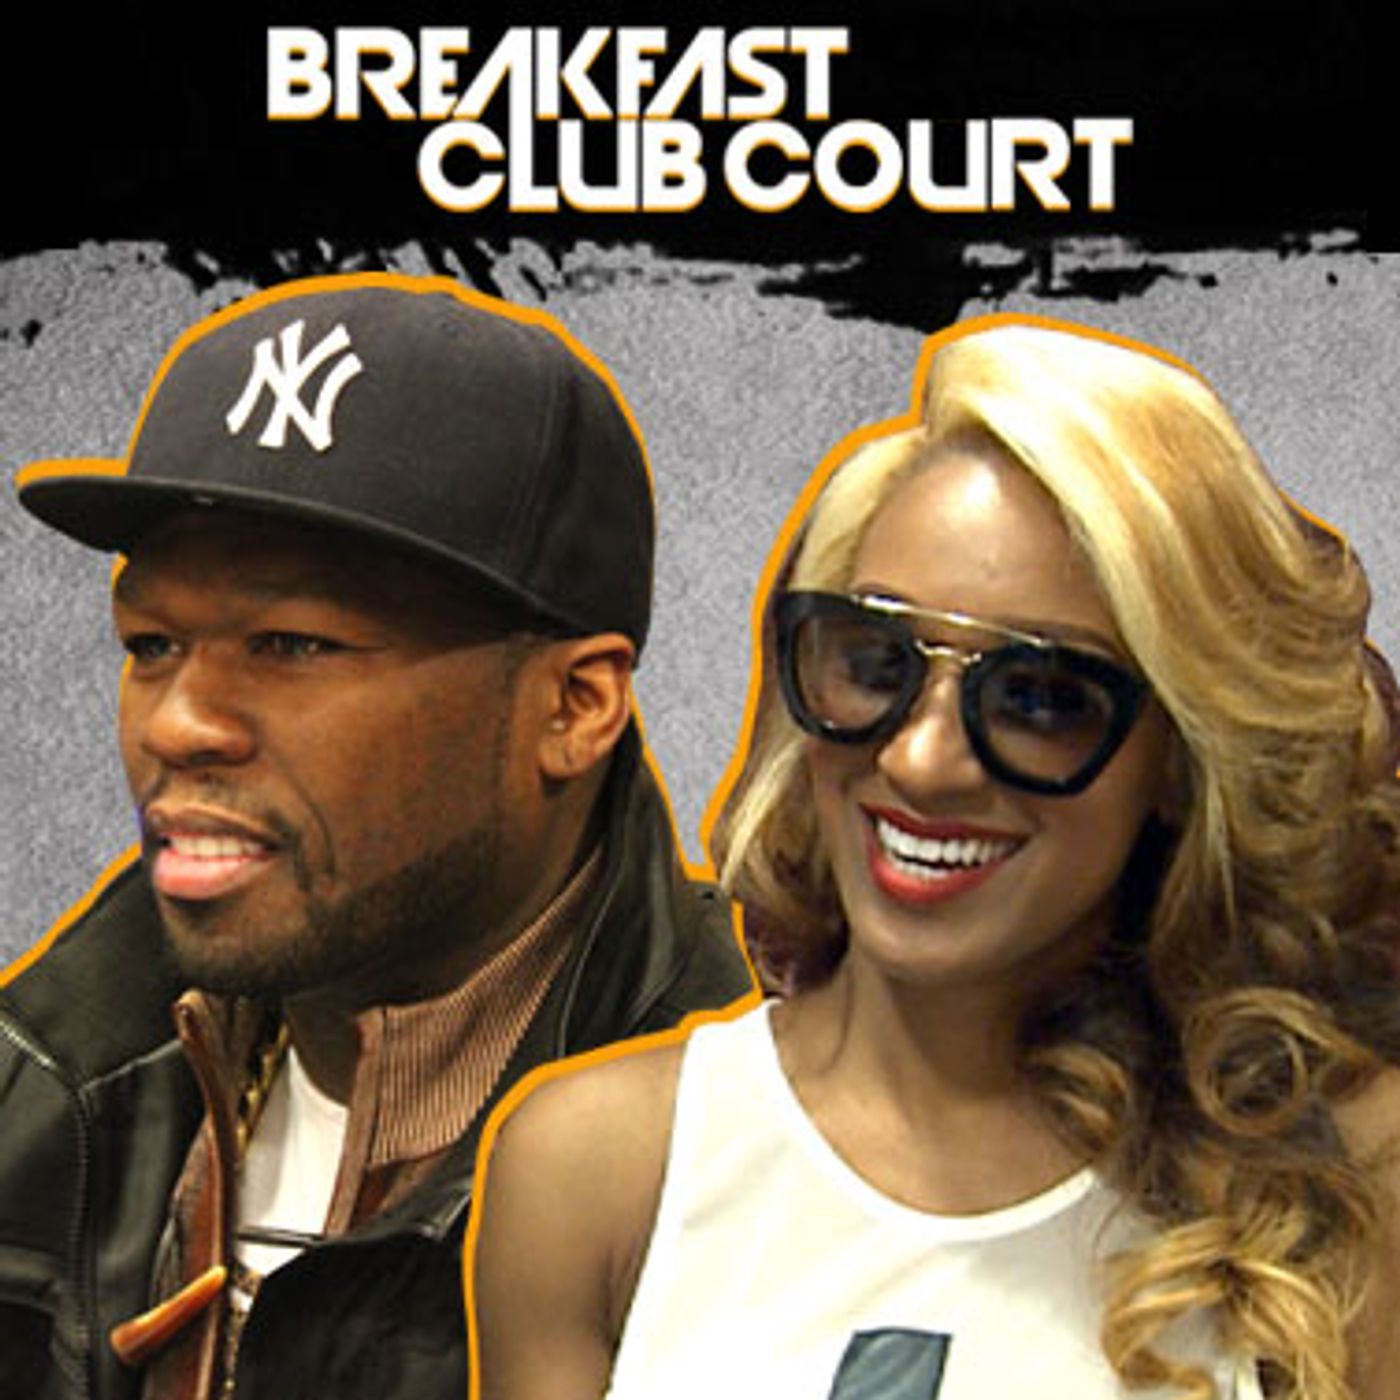 Breakfast Club Court - 50 Cent vs Olivia